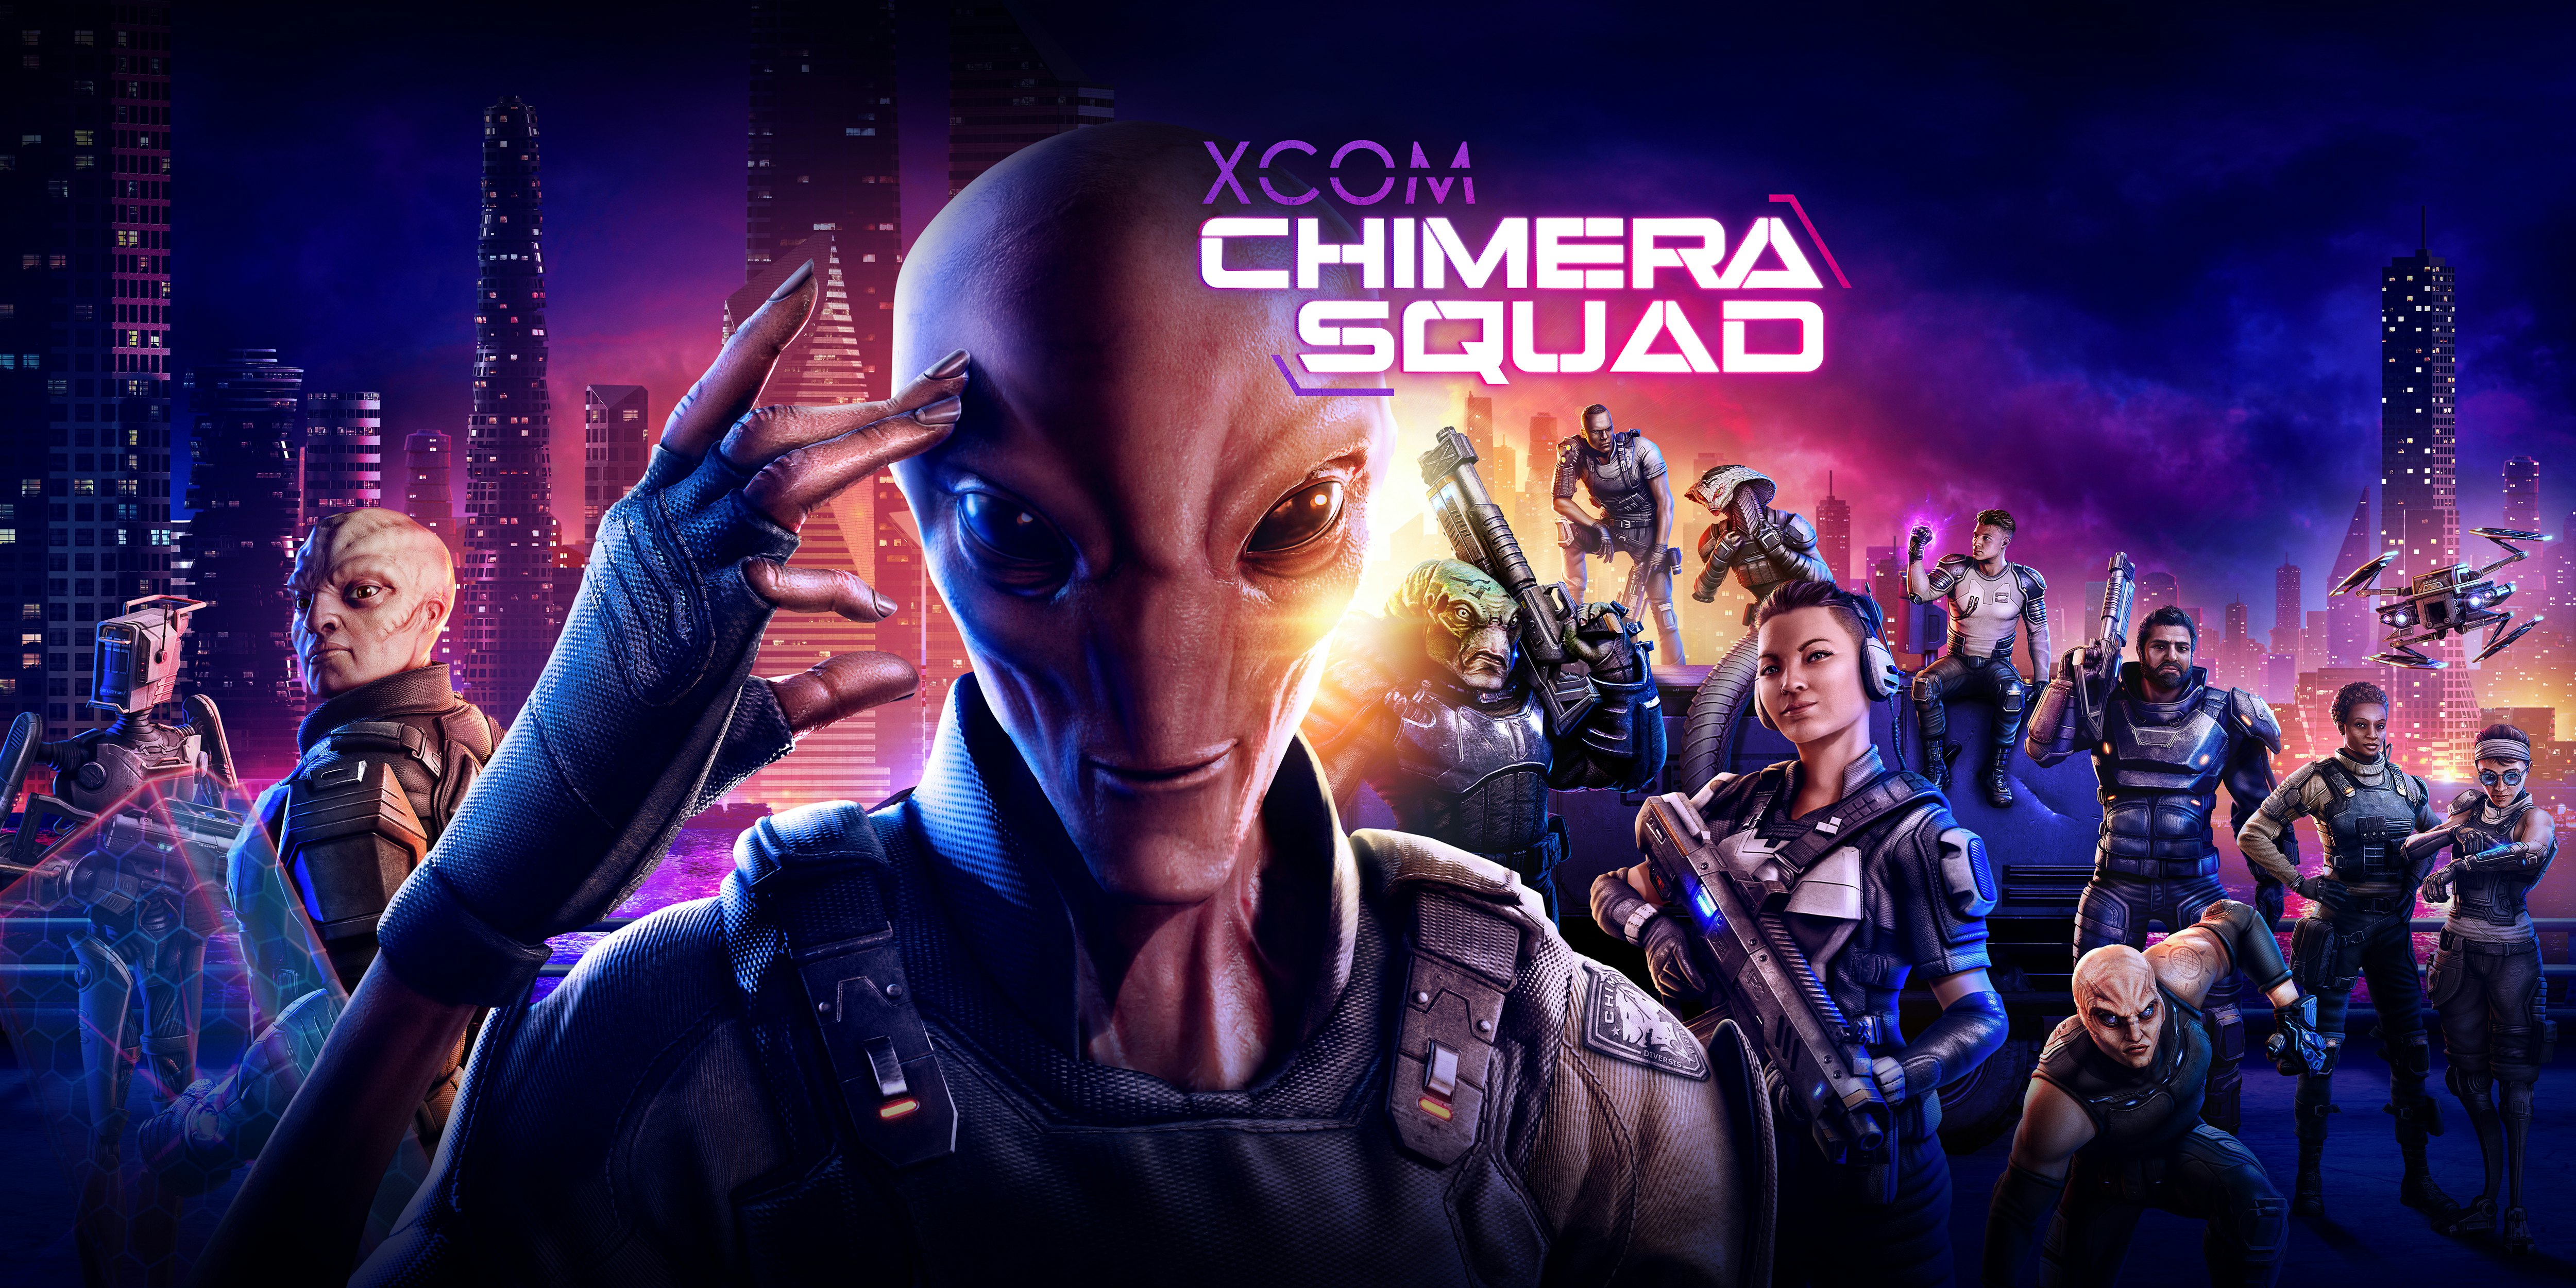 xcom chimera squad xbox one release date